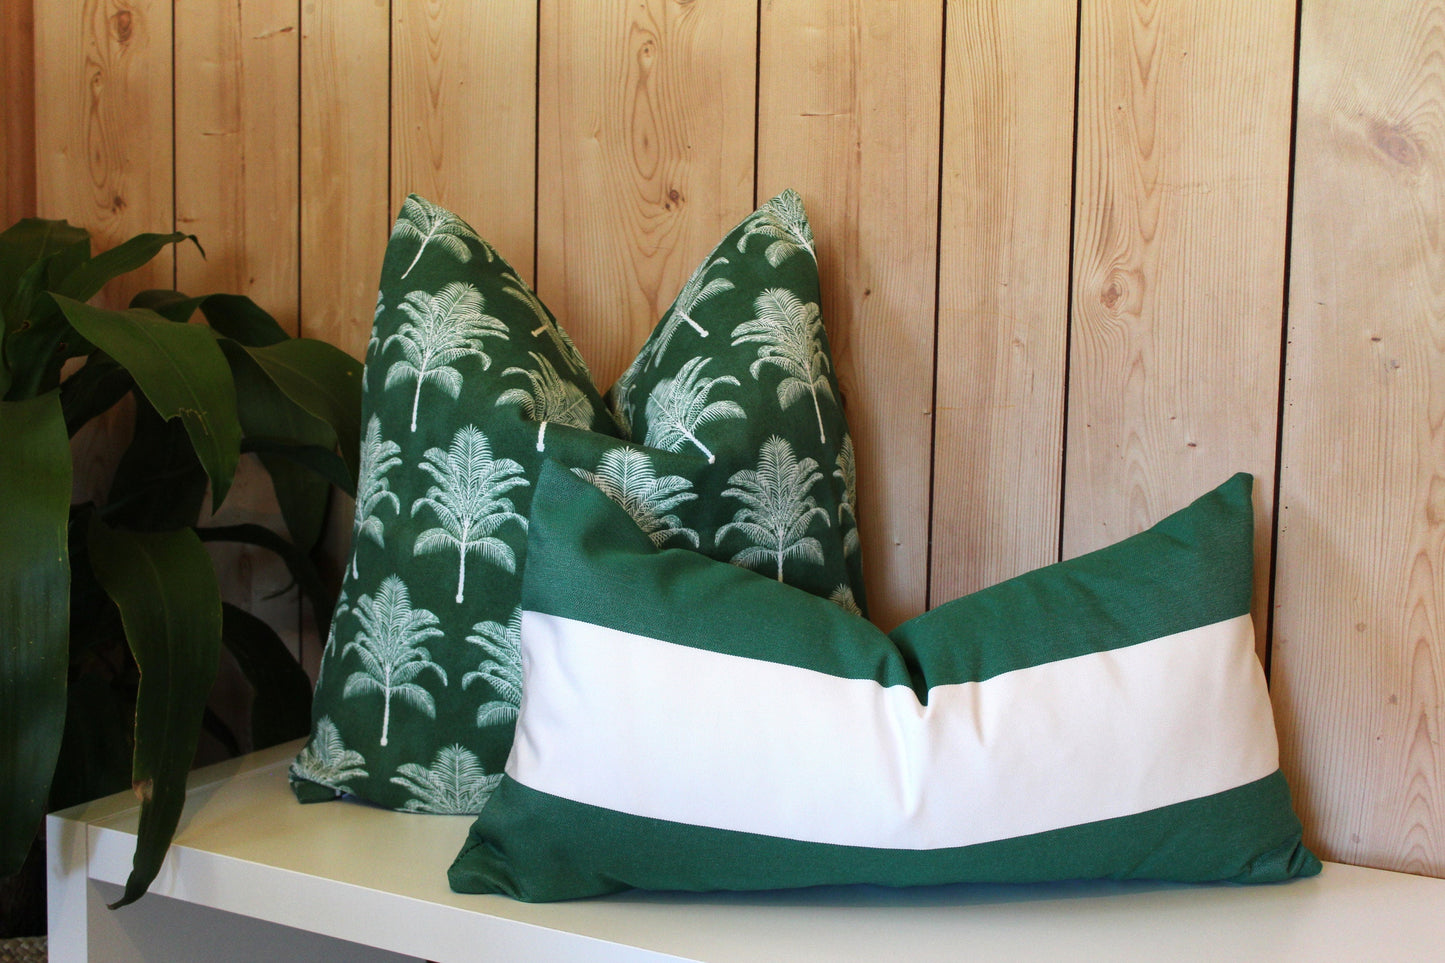 Tommy Bahama and Sunbrella Cushion covers